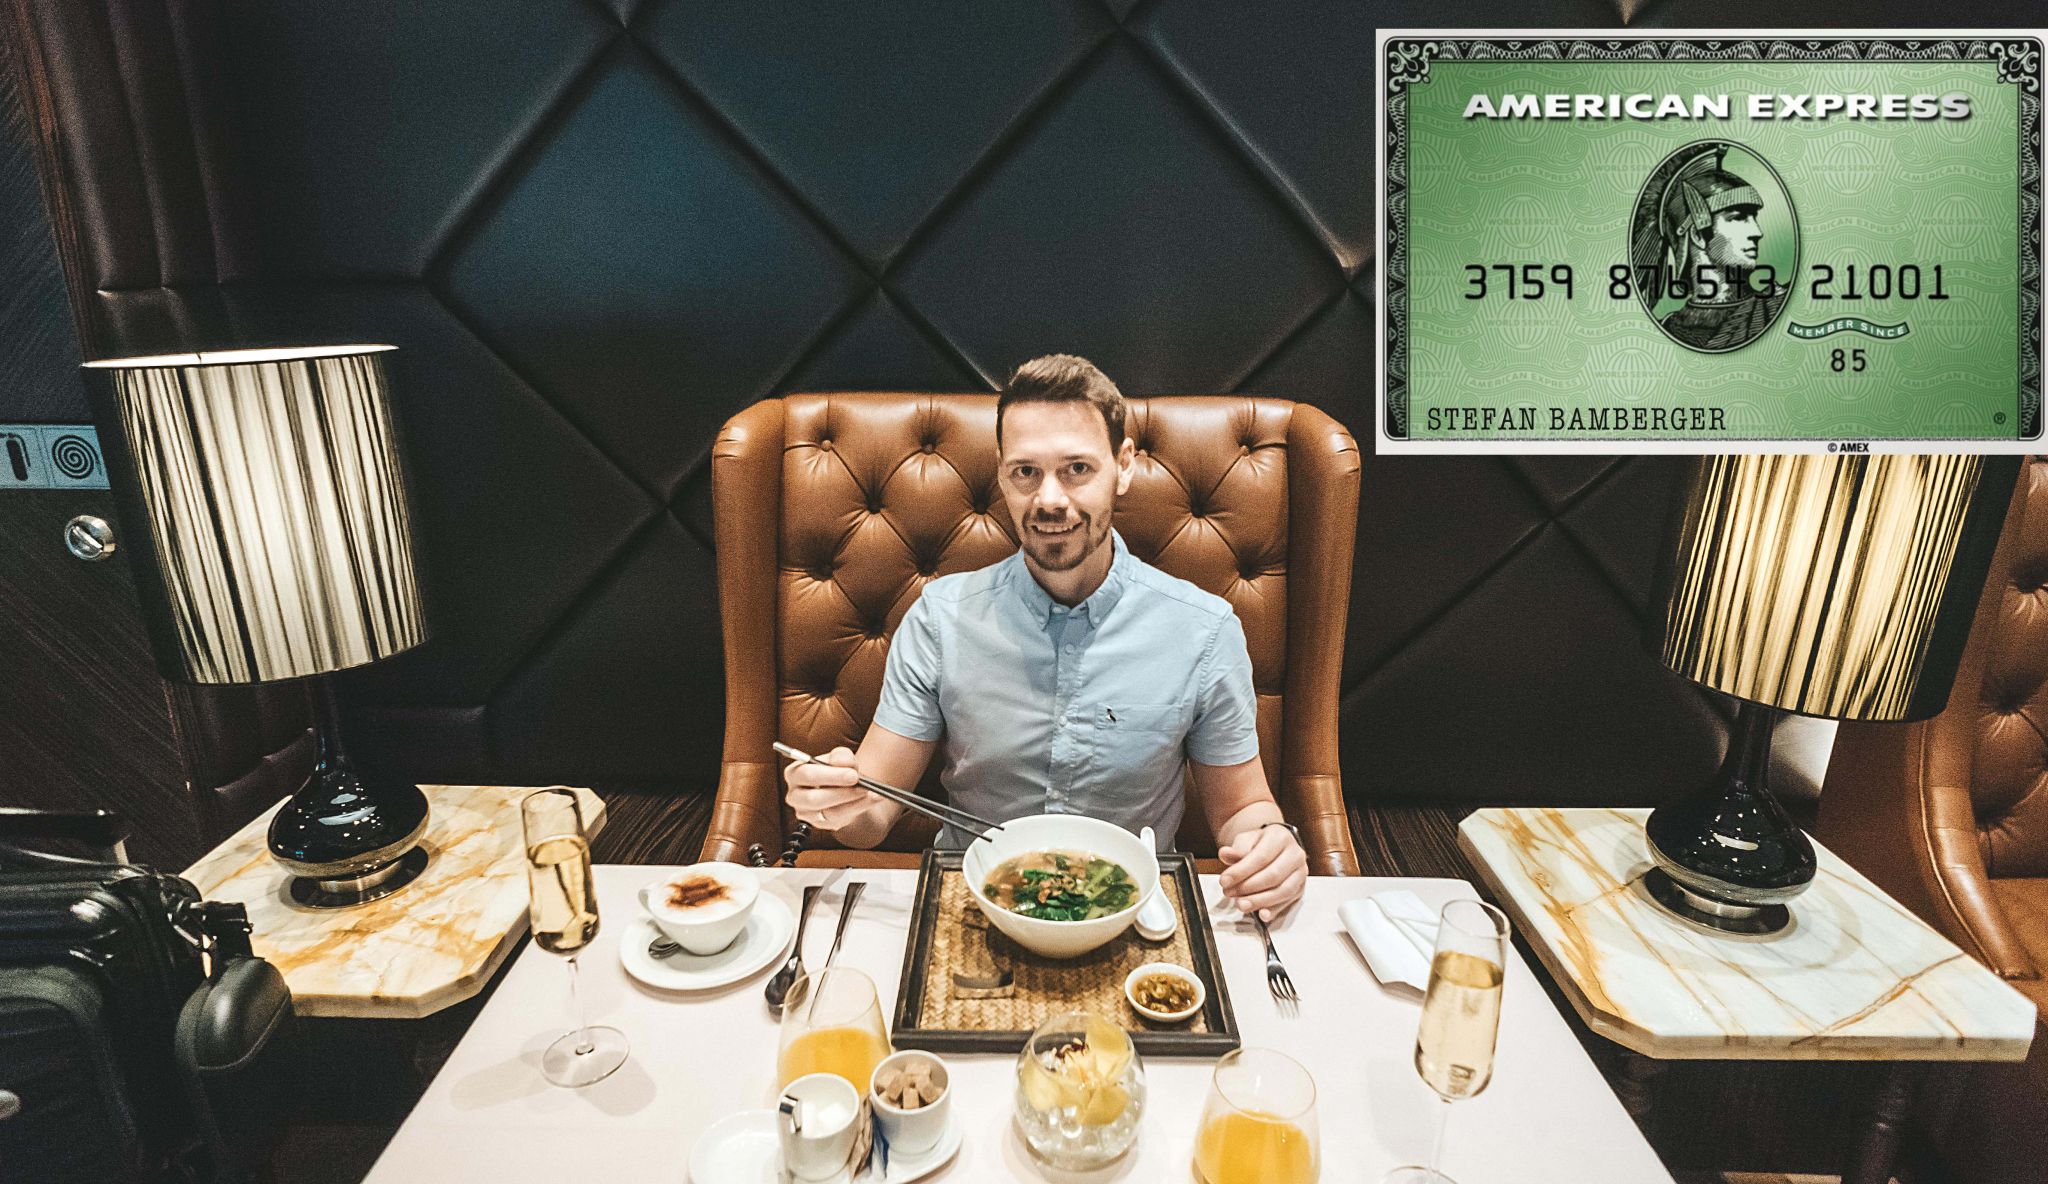 2019 09 XX Amex Green American Express Gold